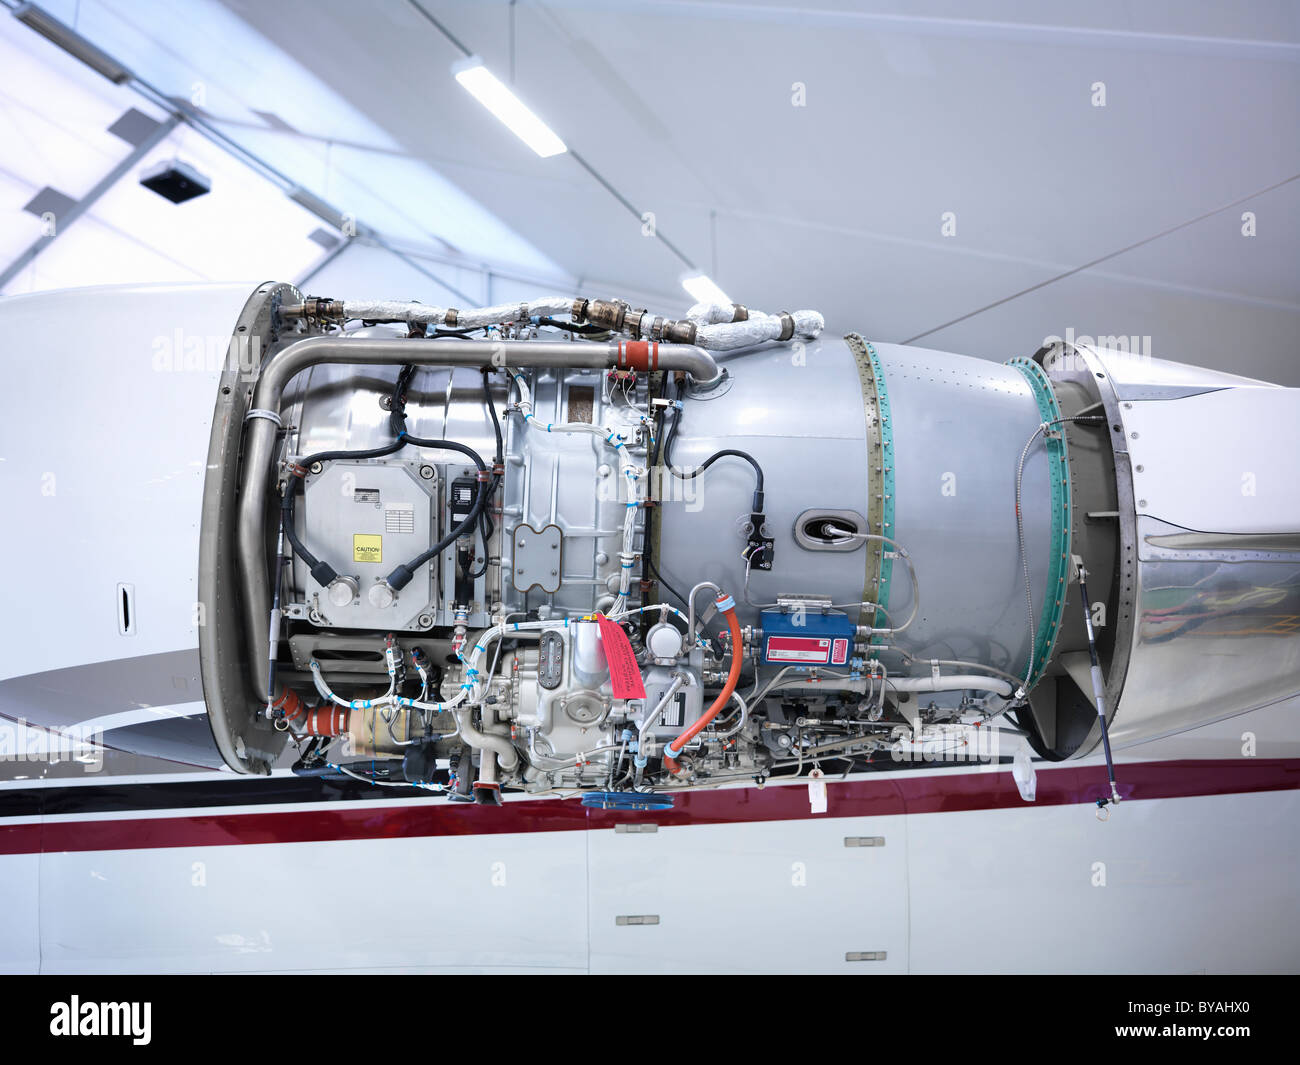 Jet engine in an aircraft hangar Stock Photo